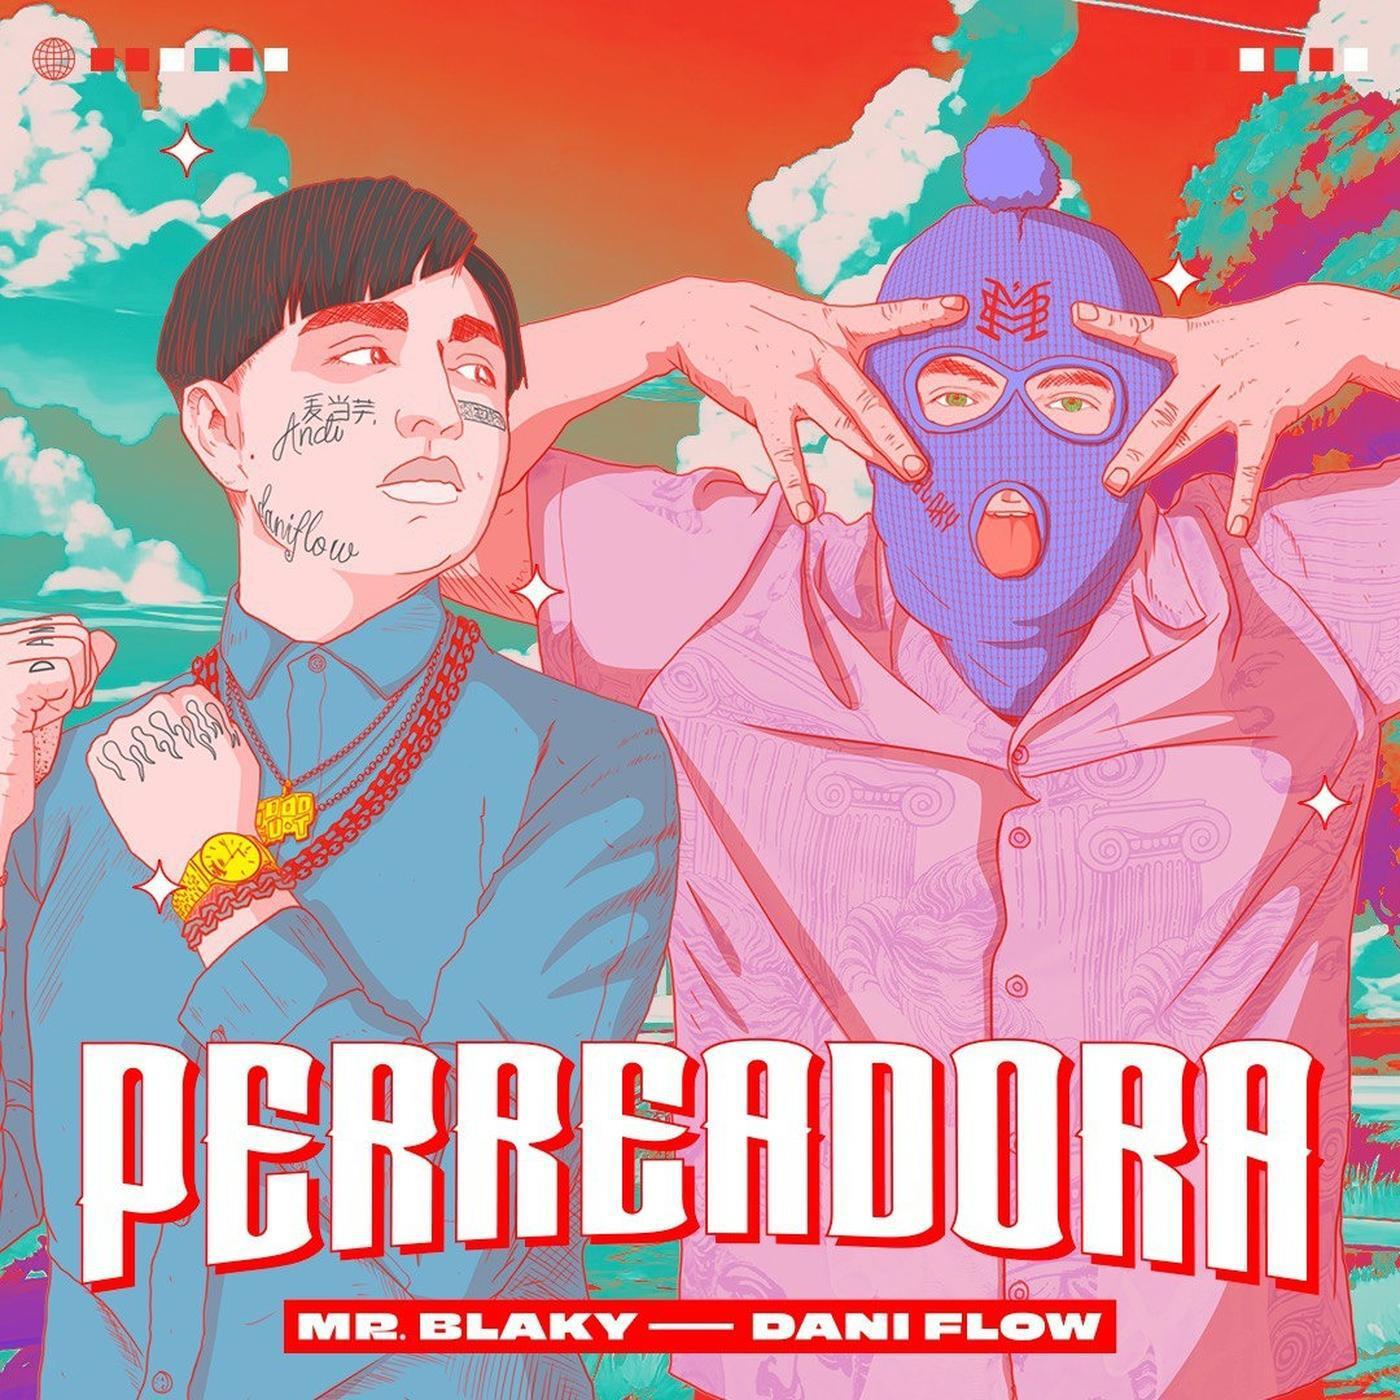 Mr. Blaky - Perreadora